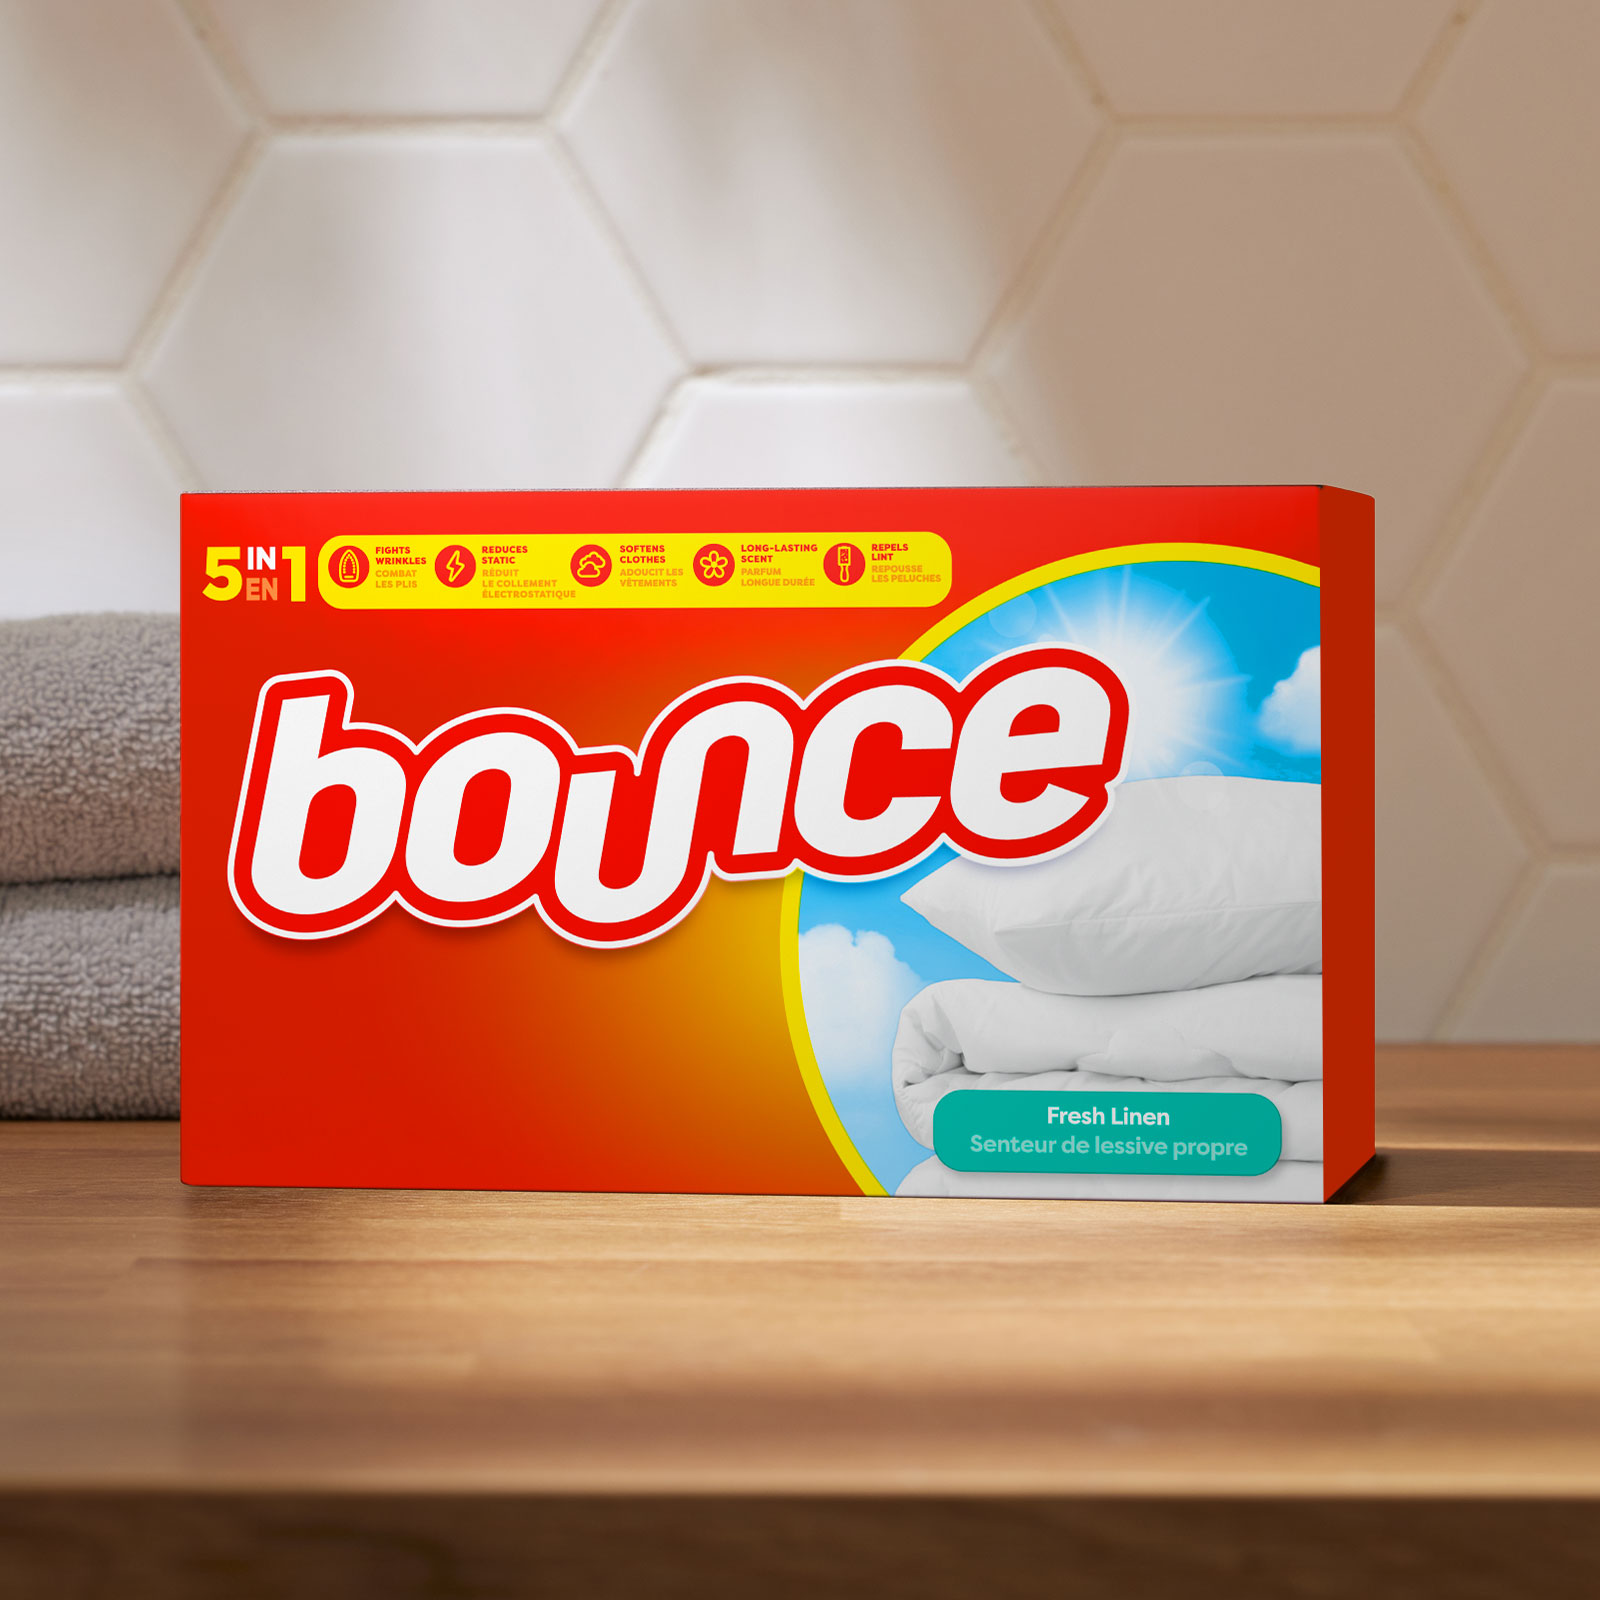 Bounce Dryer Sheets For Sensitive Skin